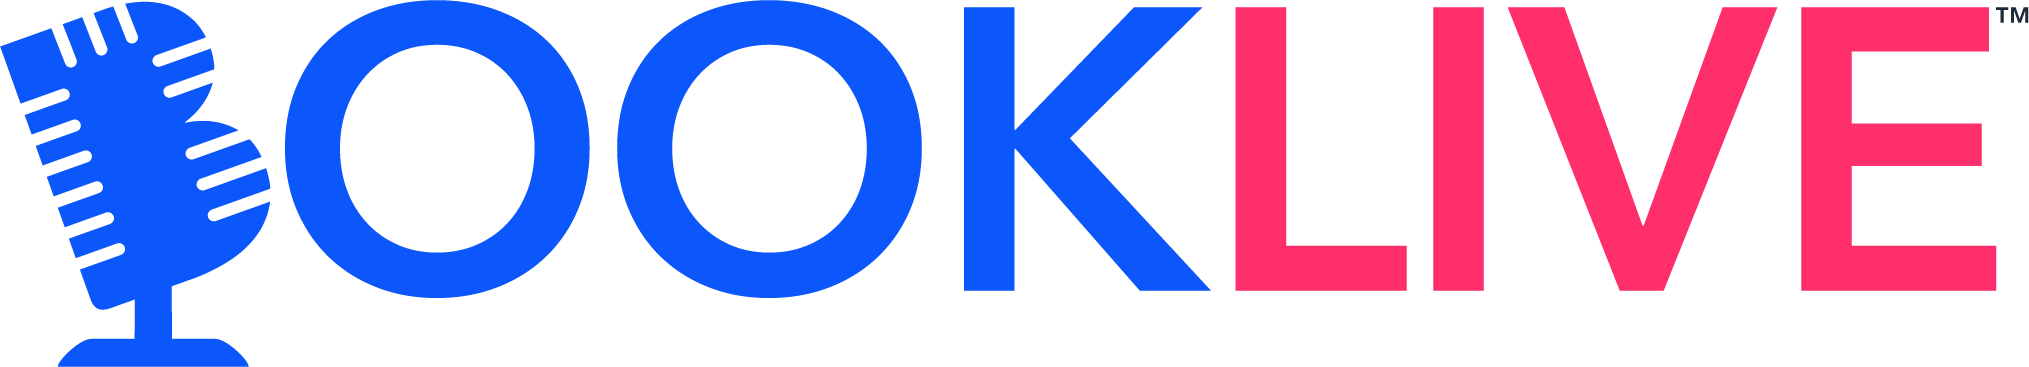 BookLive Logo.png